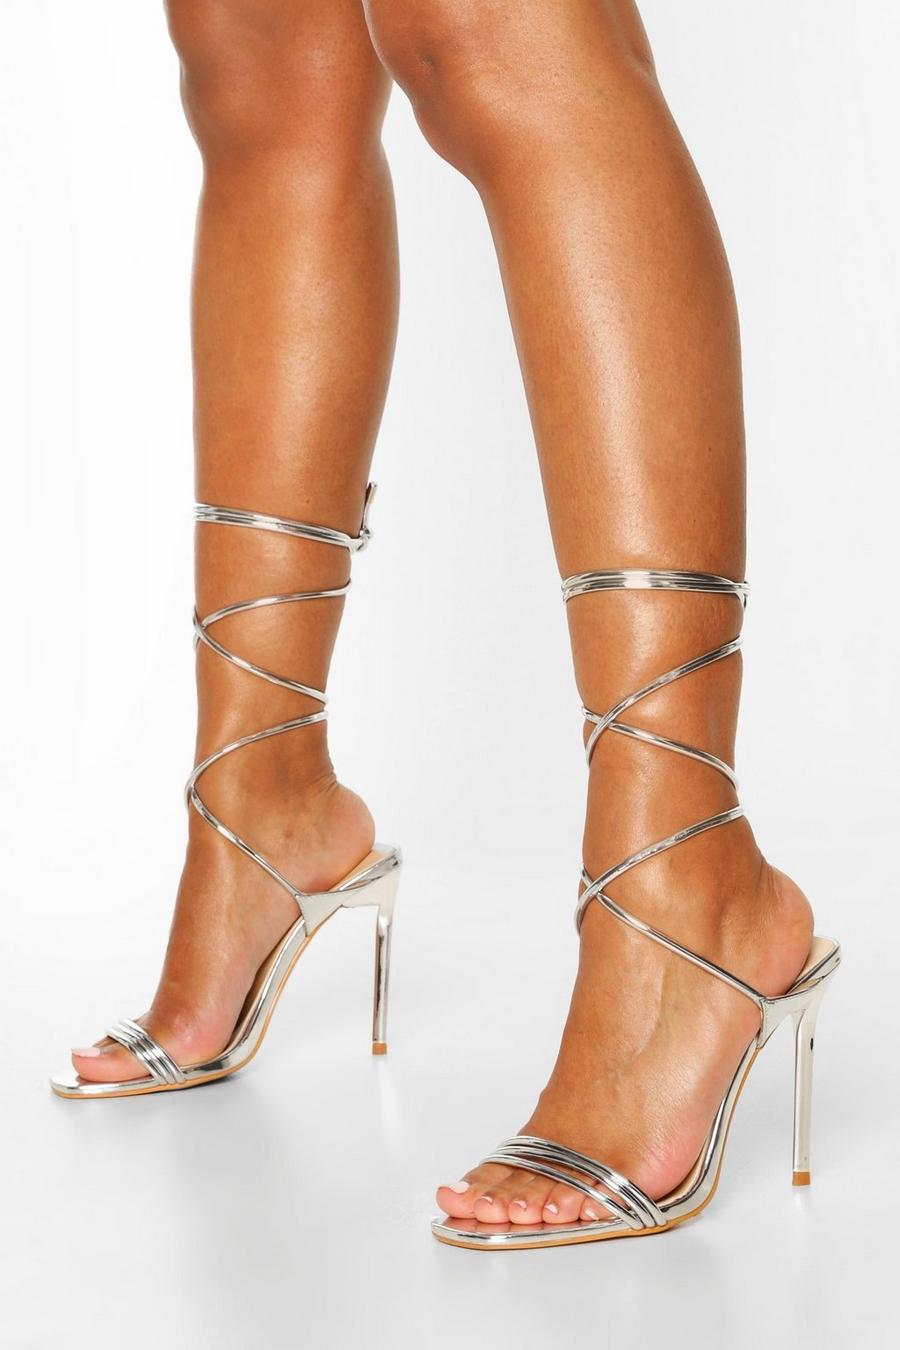 Boohoo Women's Skinny Strap Lace Up Stiletto Heels